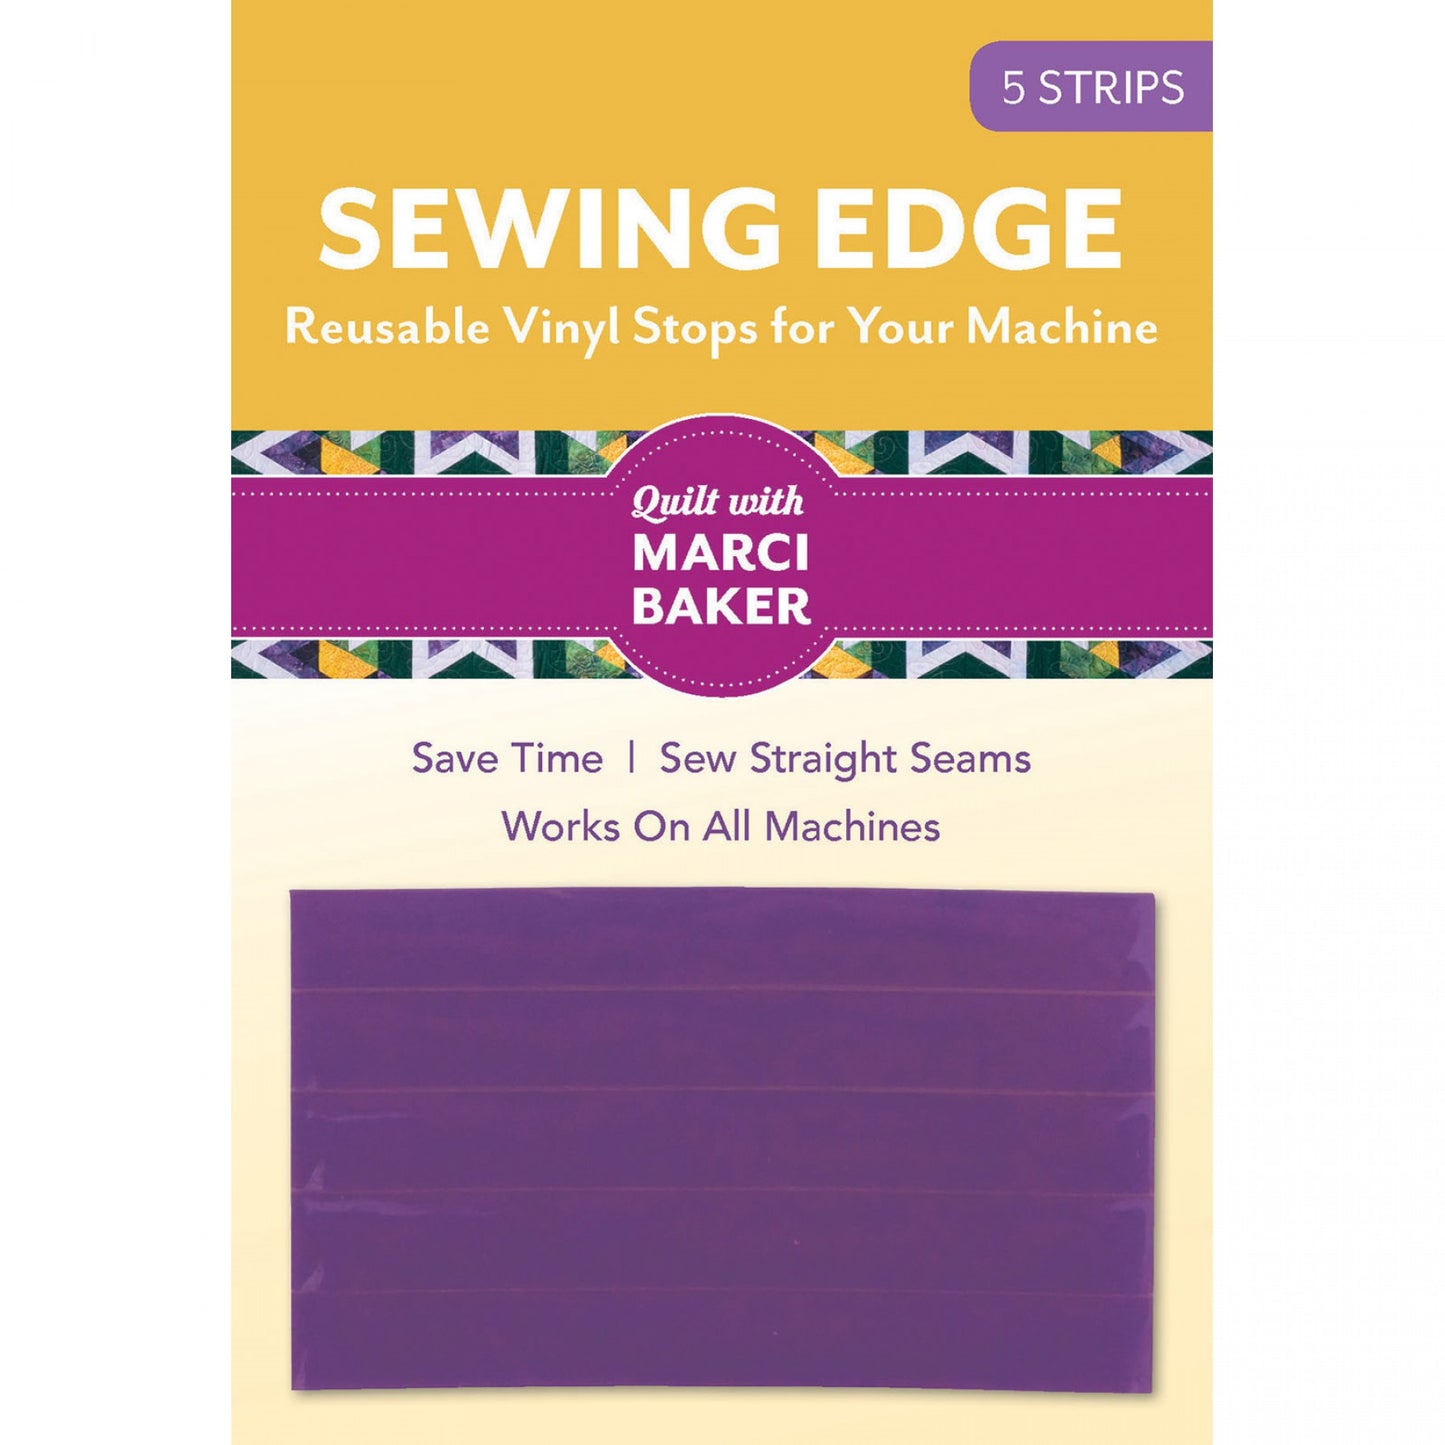 Sewing Edge